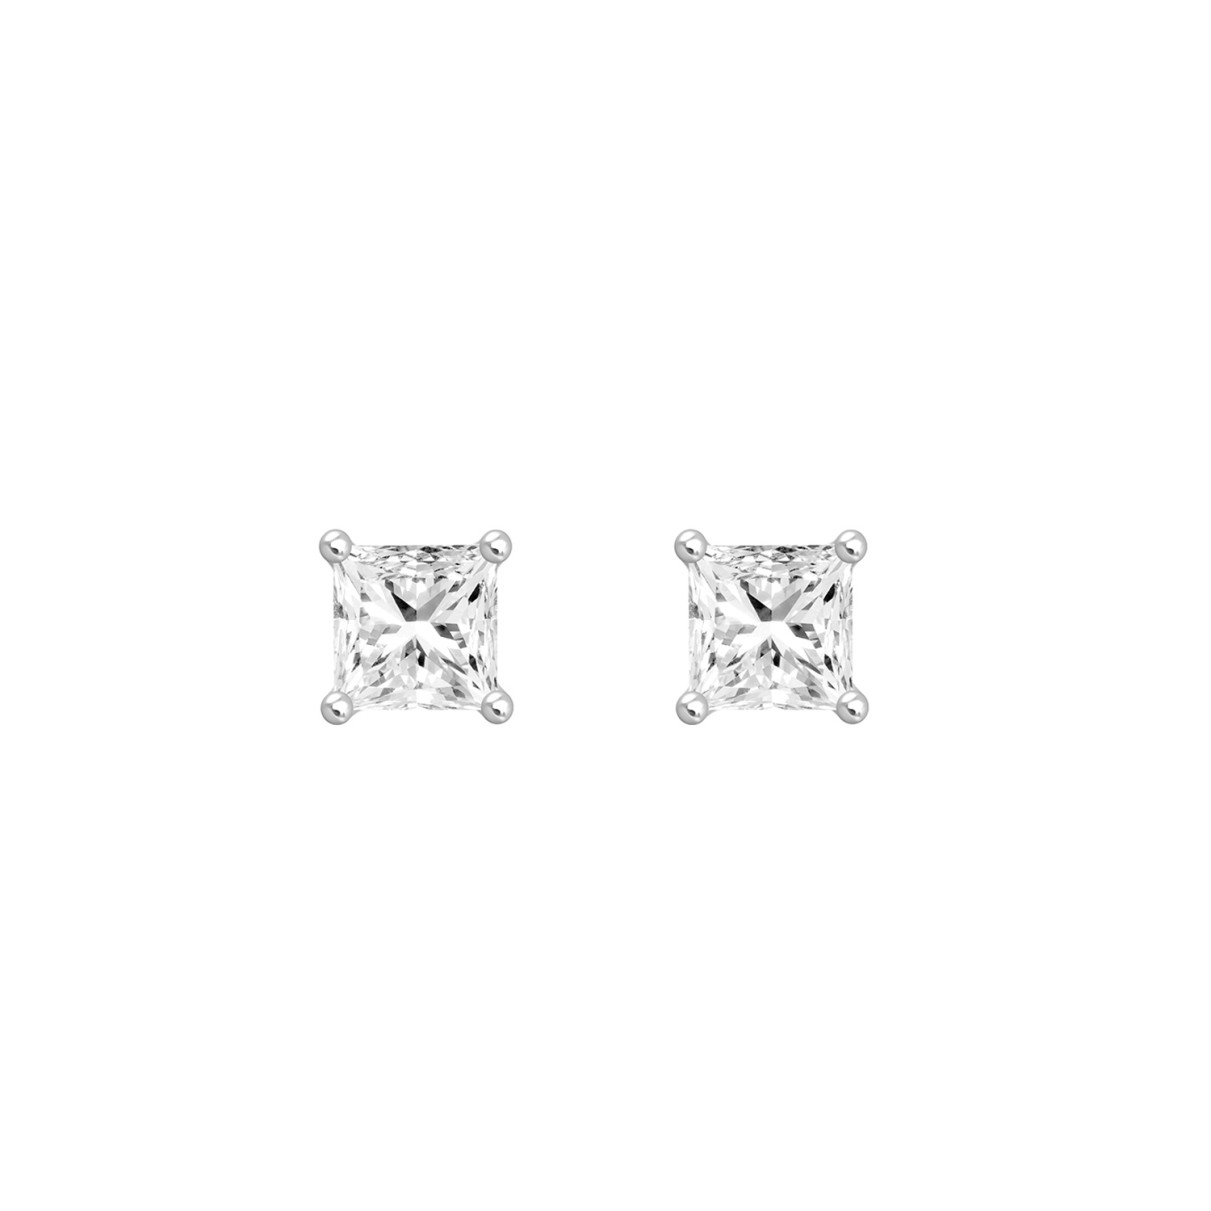 LADIES SOLITAIRE EARRINGS 4CT PRINCESS DIAMOND 14K WHITE GOLD 